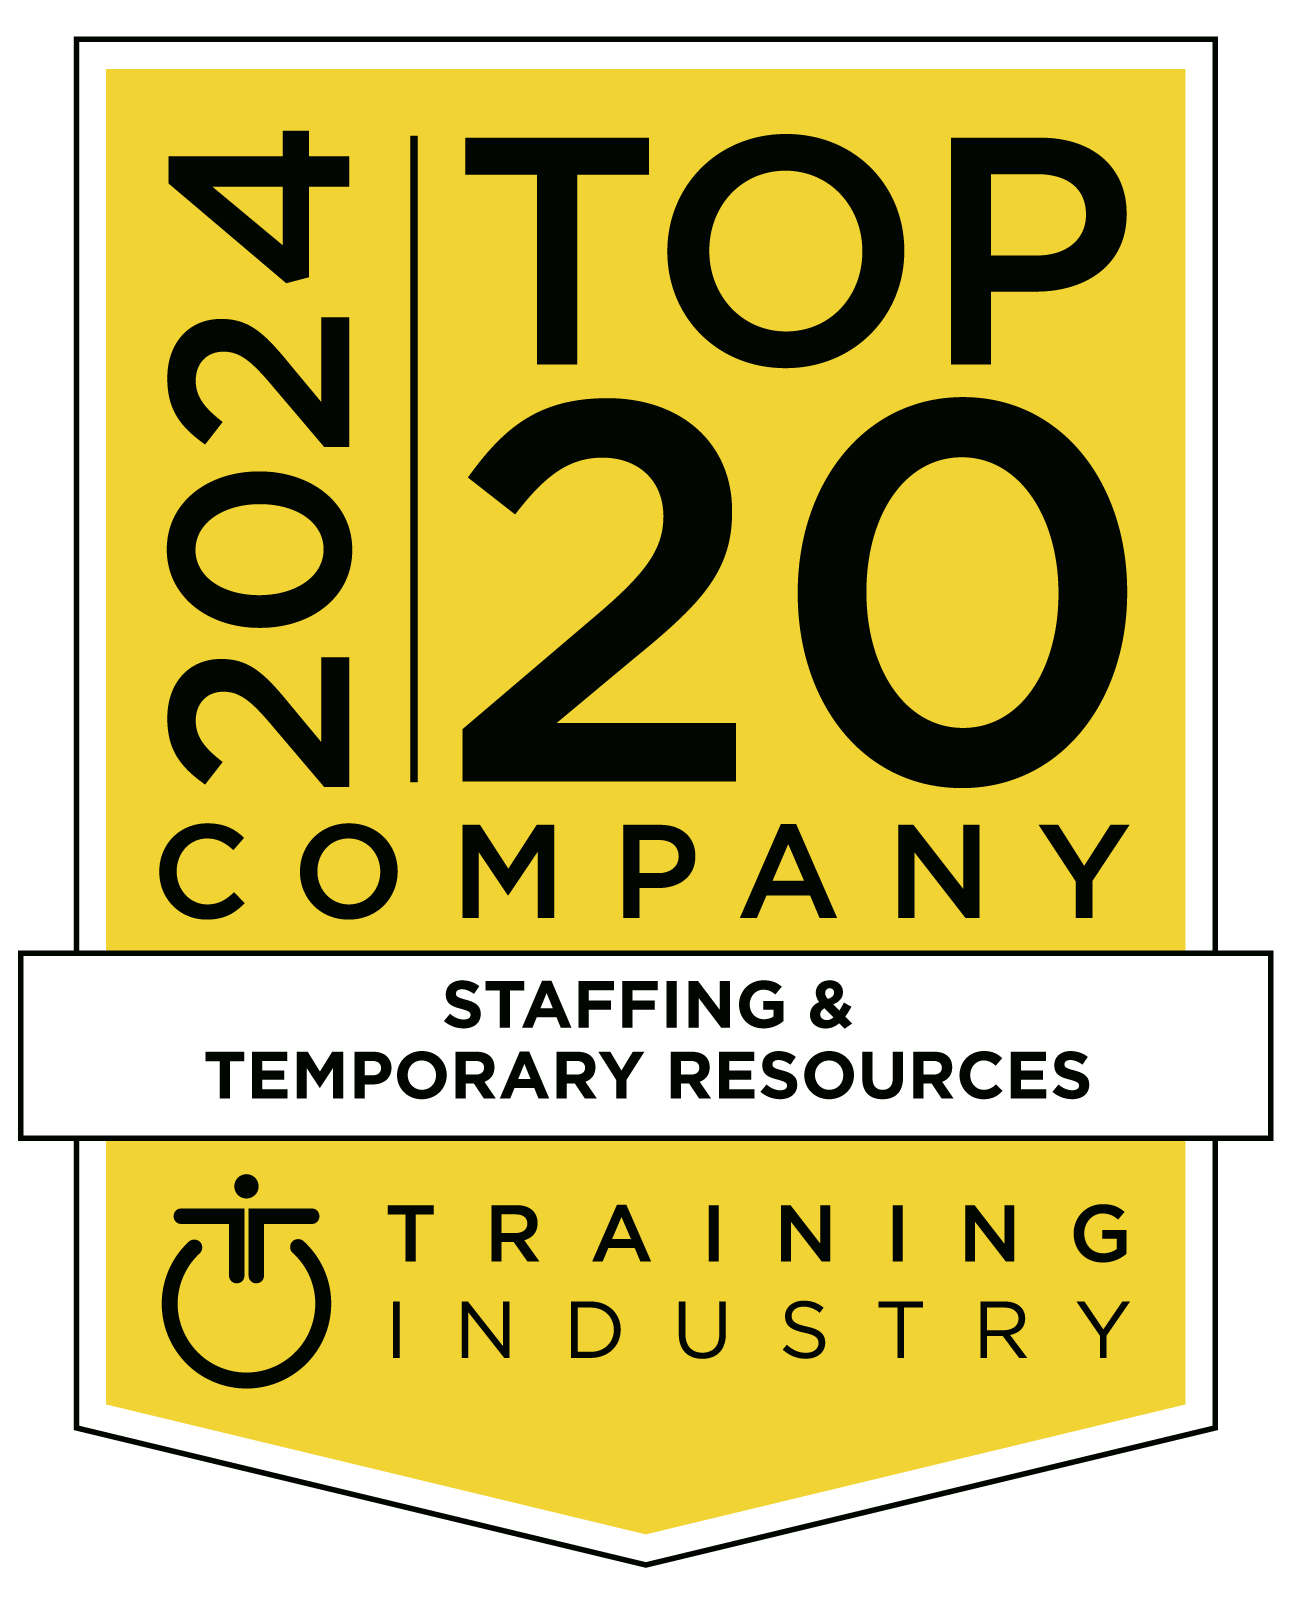 Top Staffing Company Award